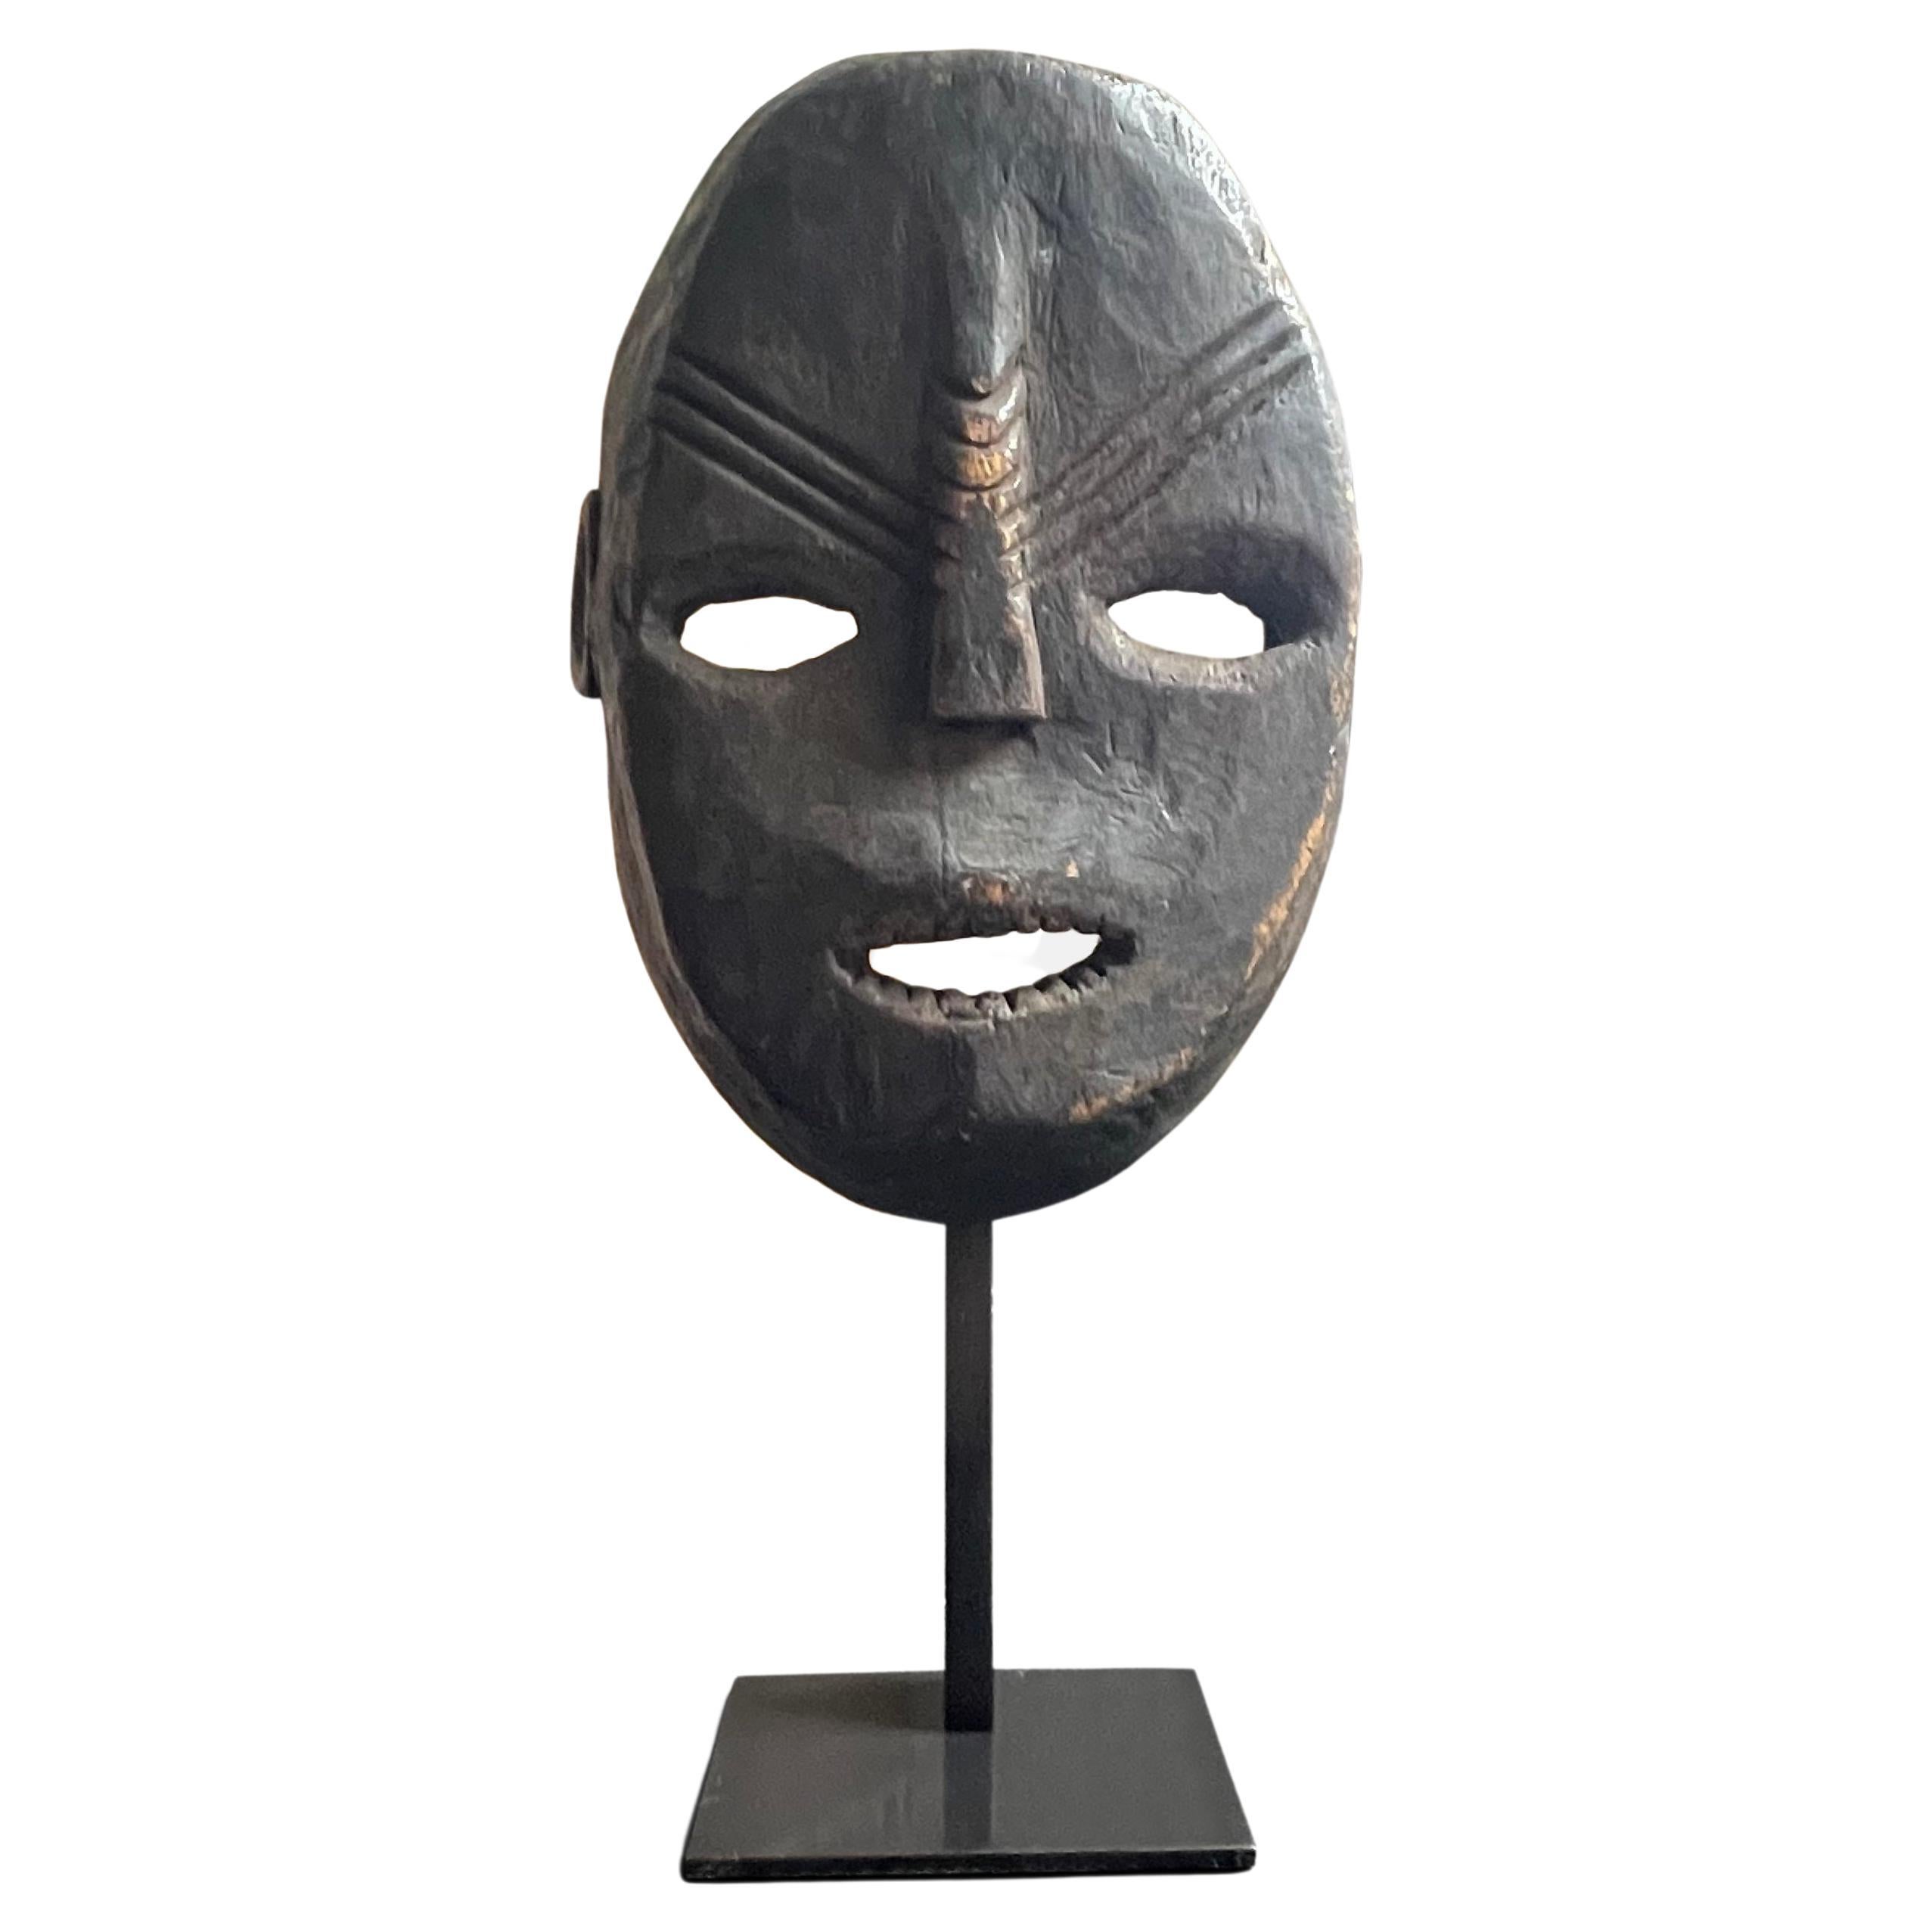 Ngbaka Kongolesische Stammesmaske für Initiationsrituale, Ngbaka, frühes 20. Jahrhundert